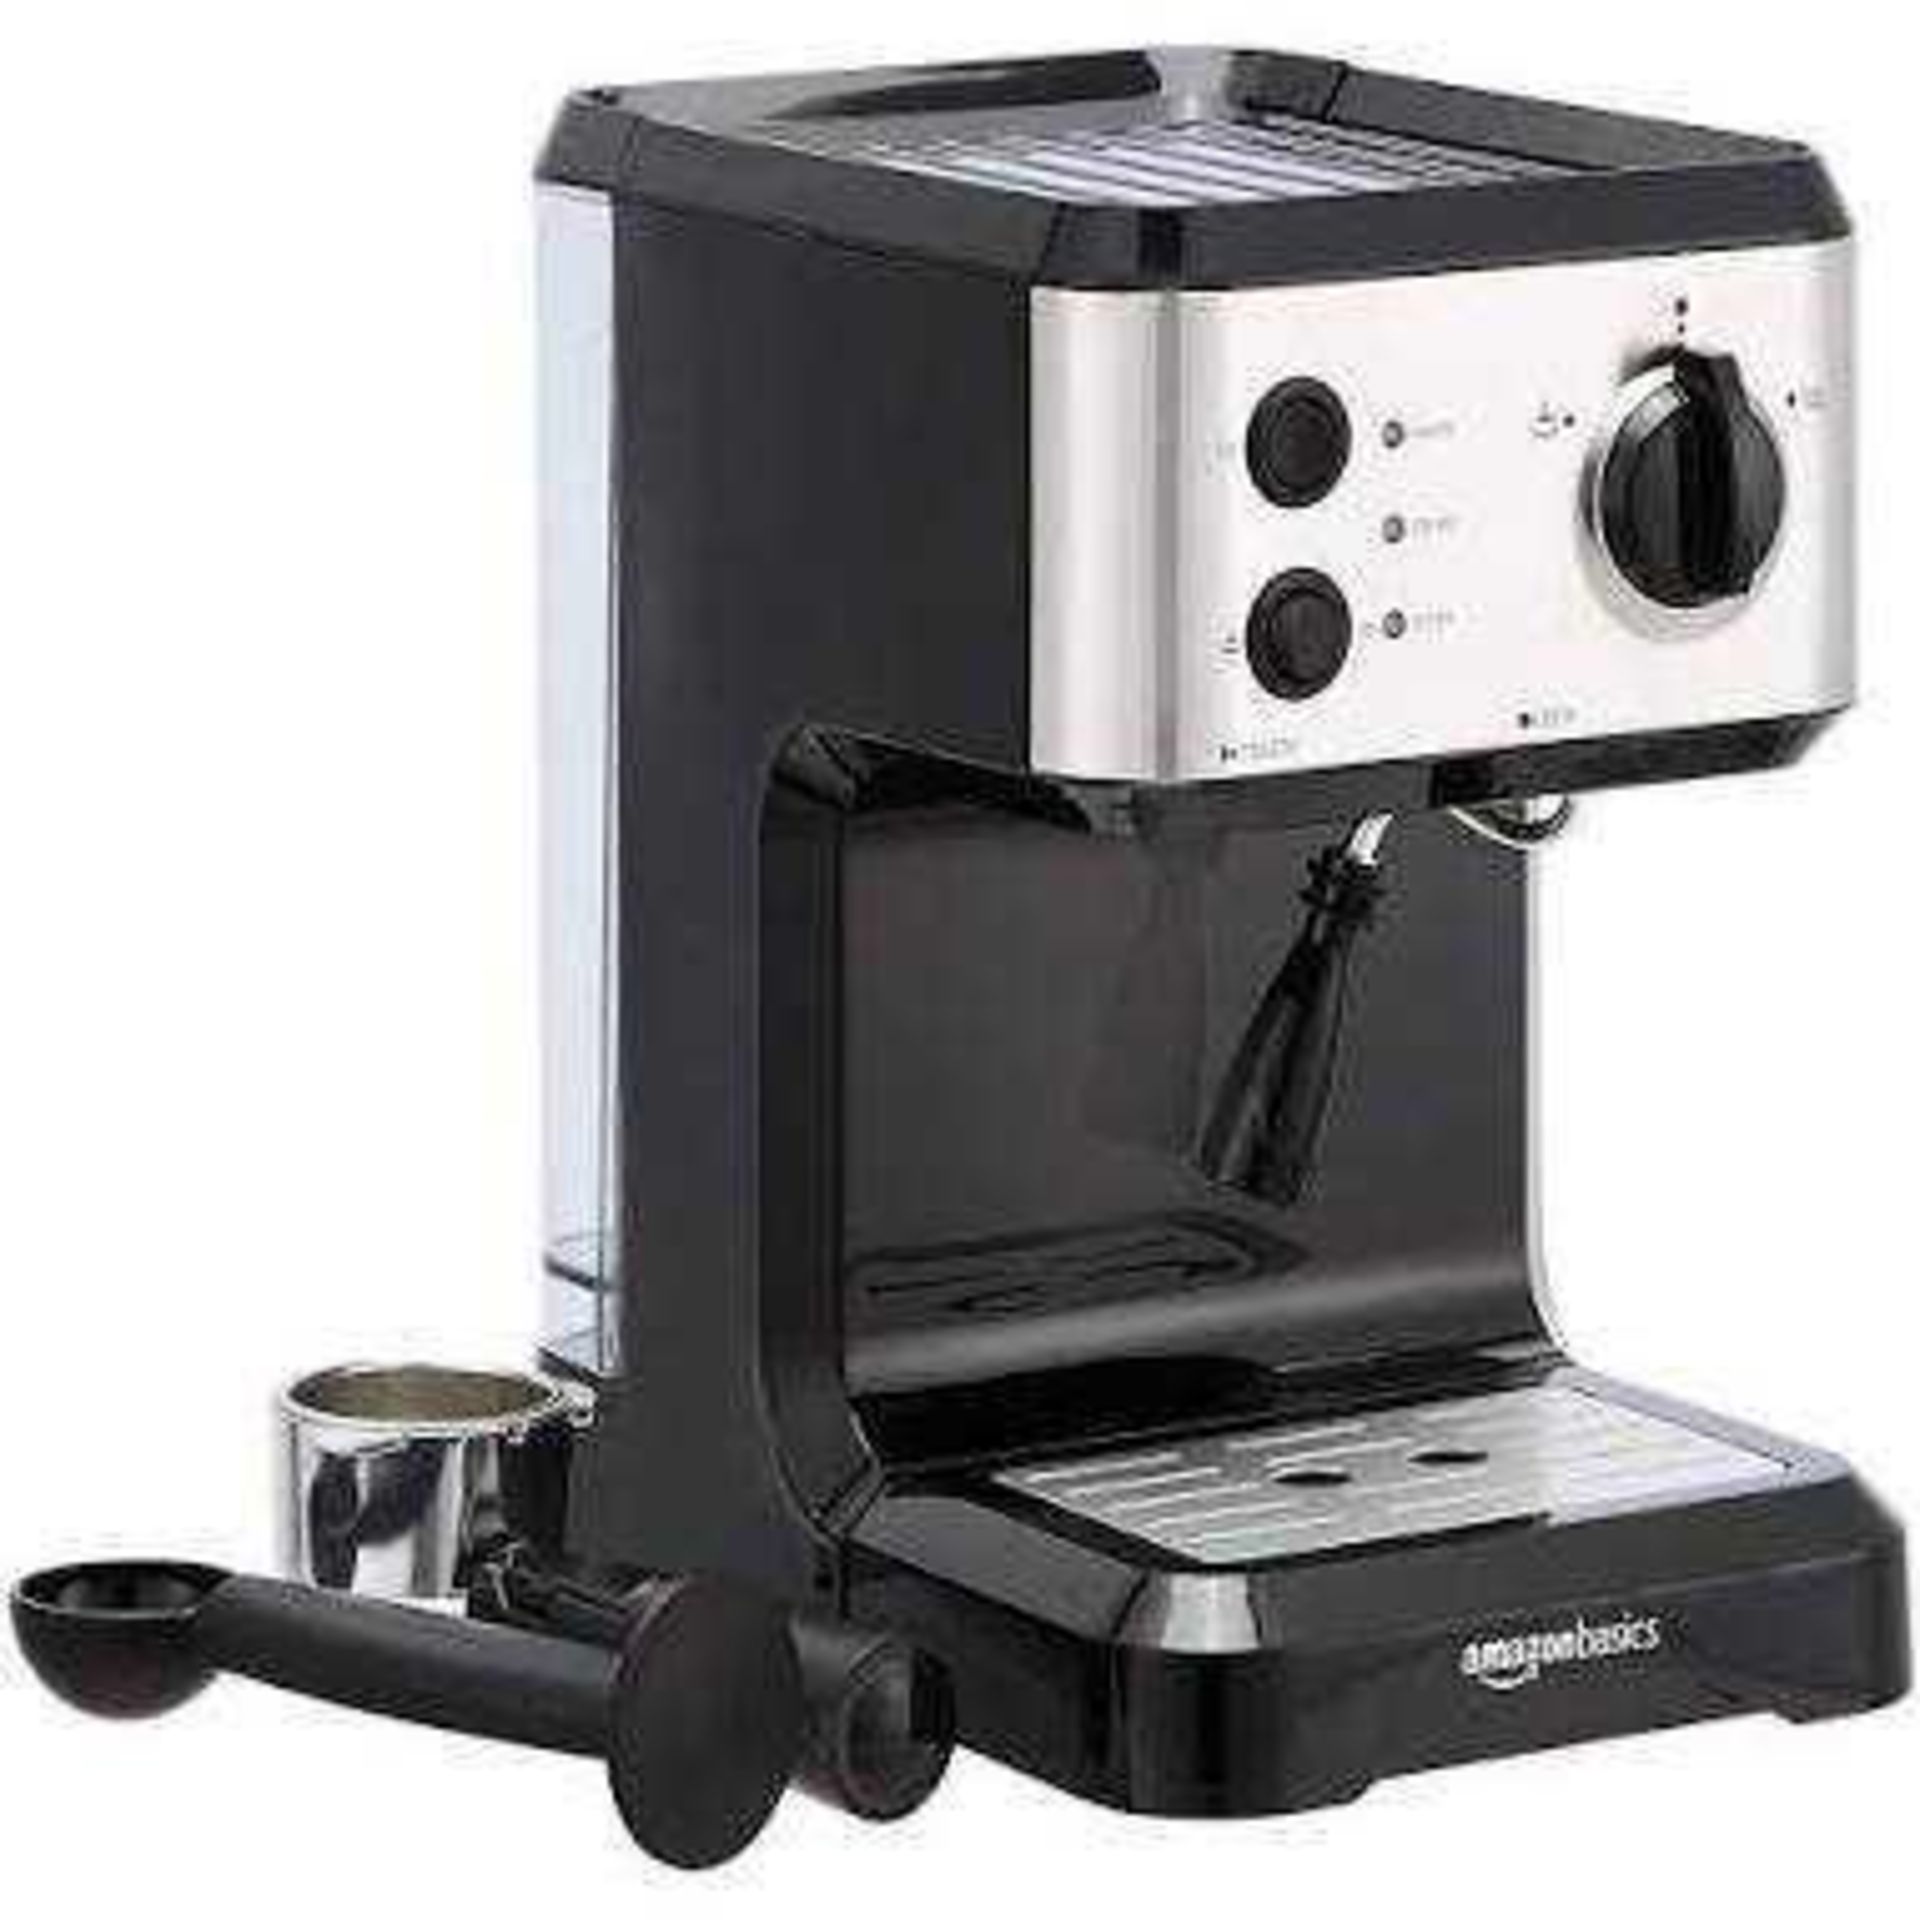 RRP £140 Lot To Contain 2X Boxed Amazon Espresso Coffee Machines